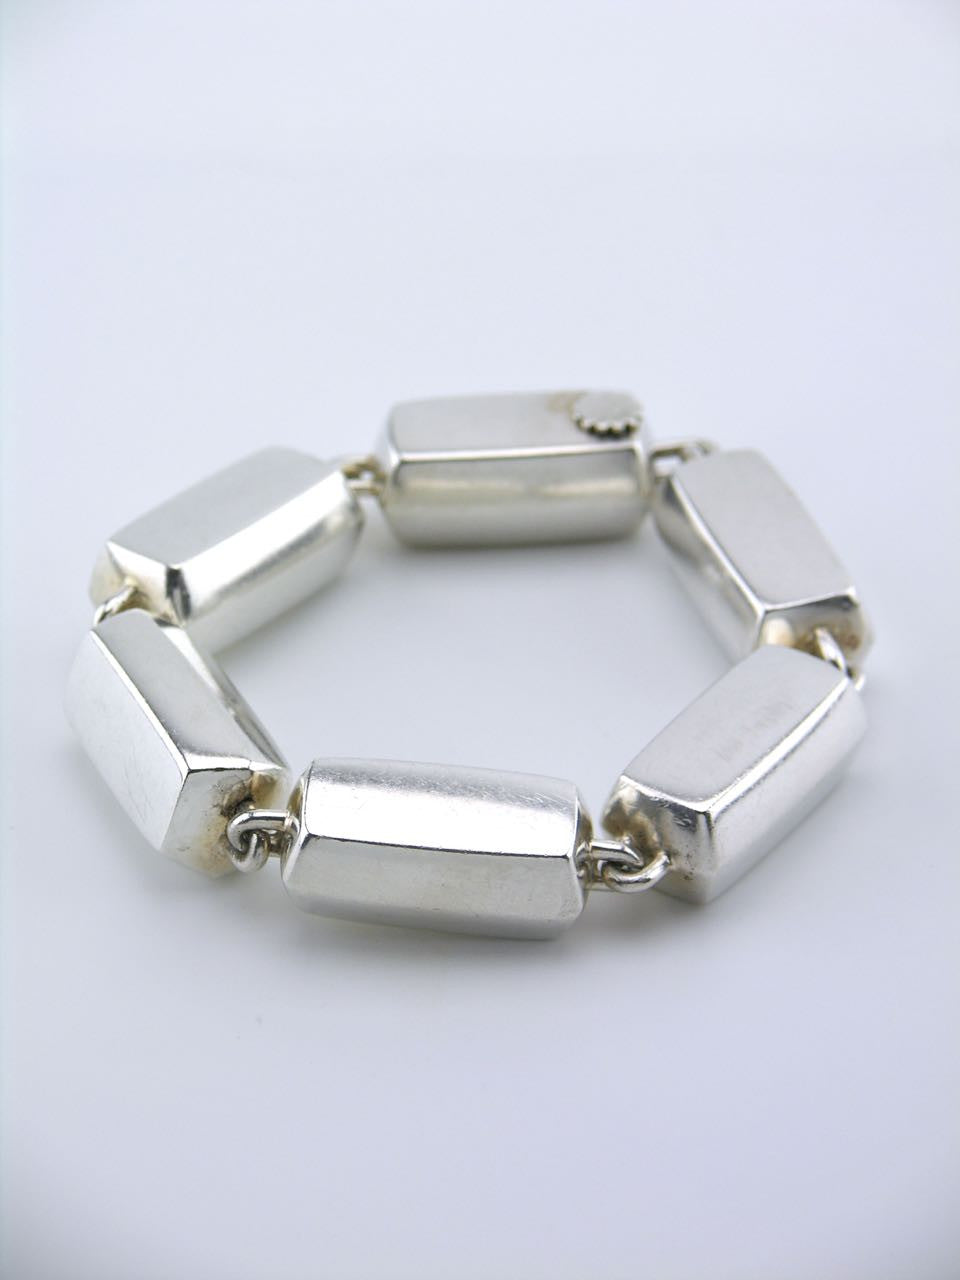 Hans Hansen silver "brick" link bracelet